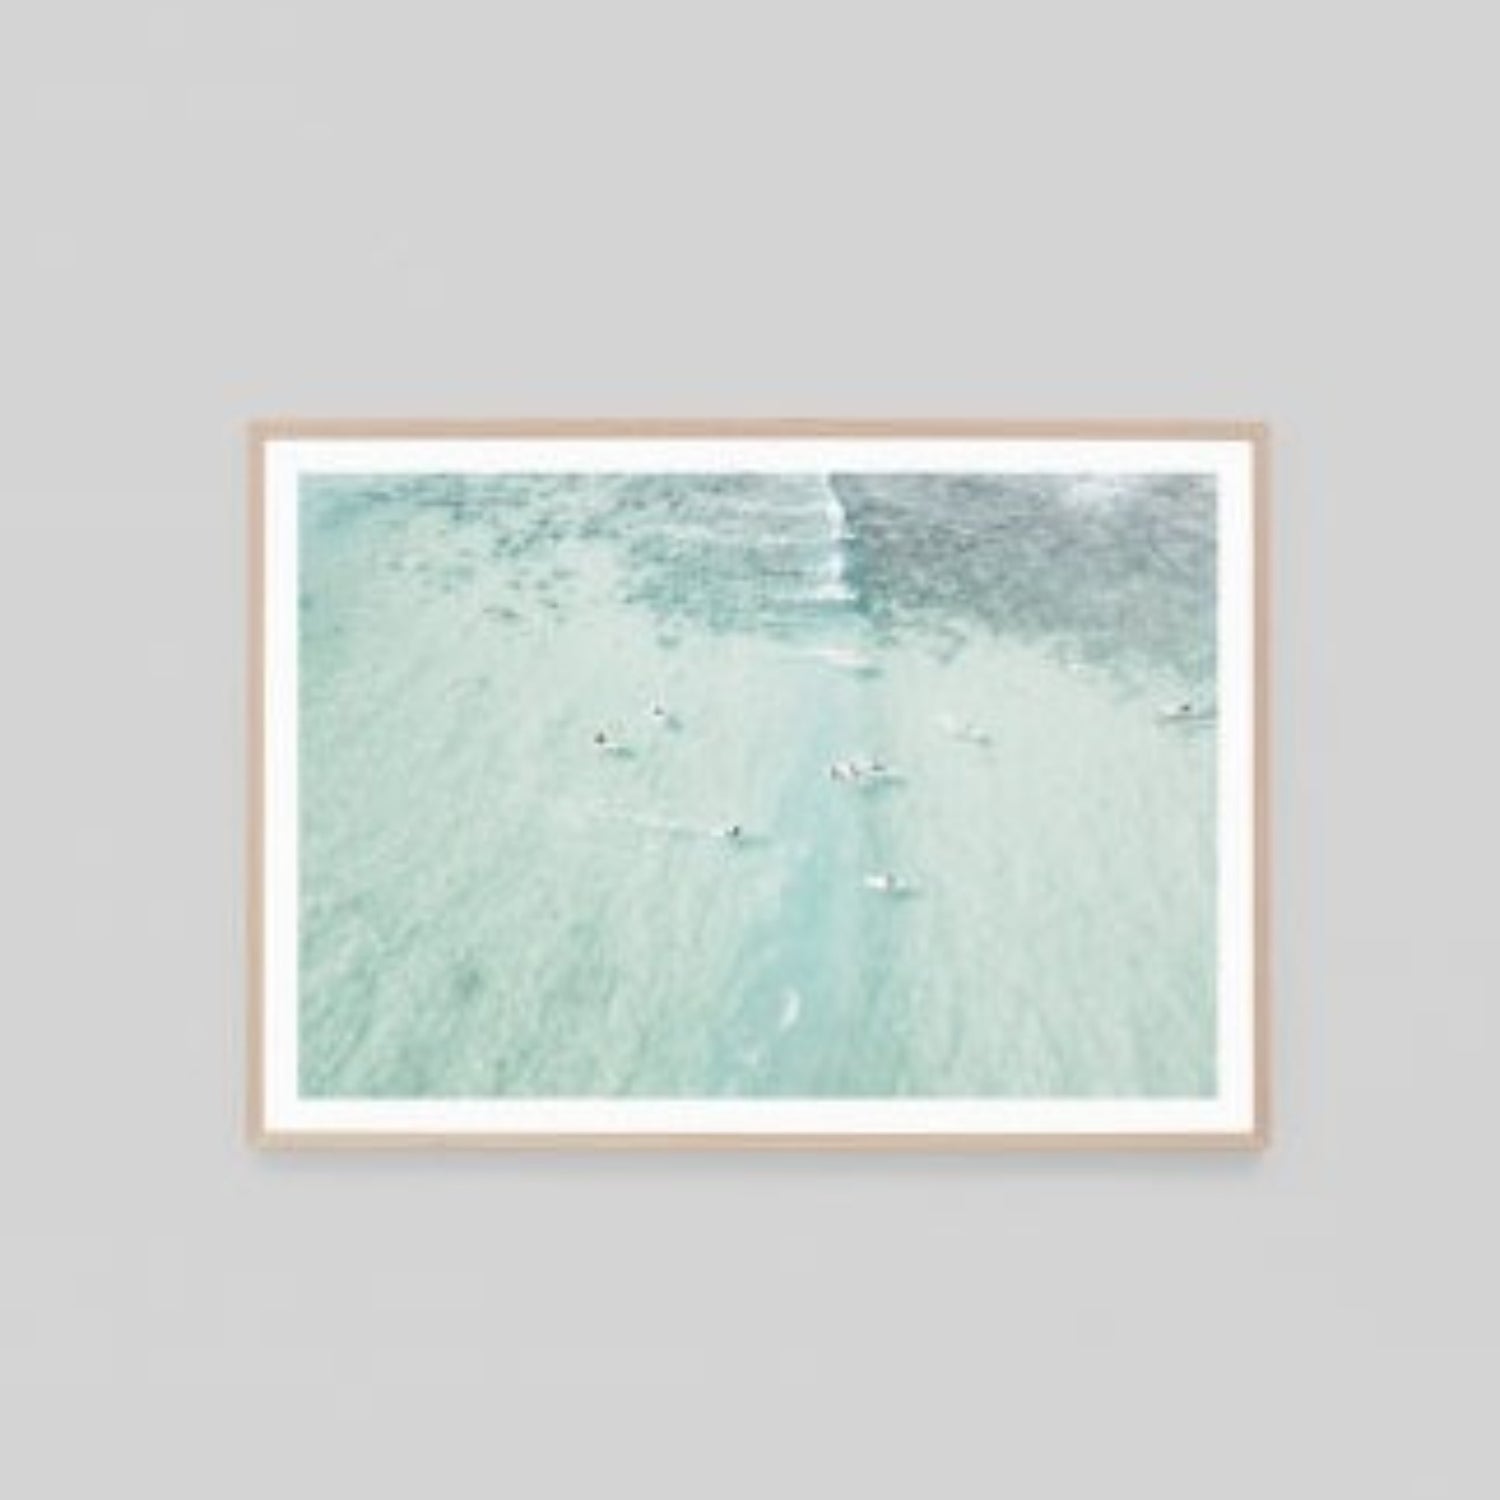 Reefside Surfers Print